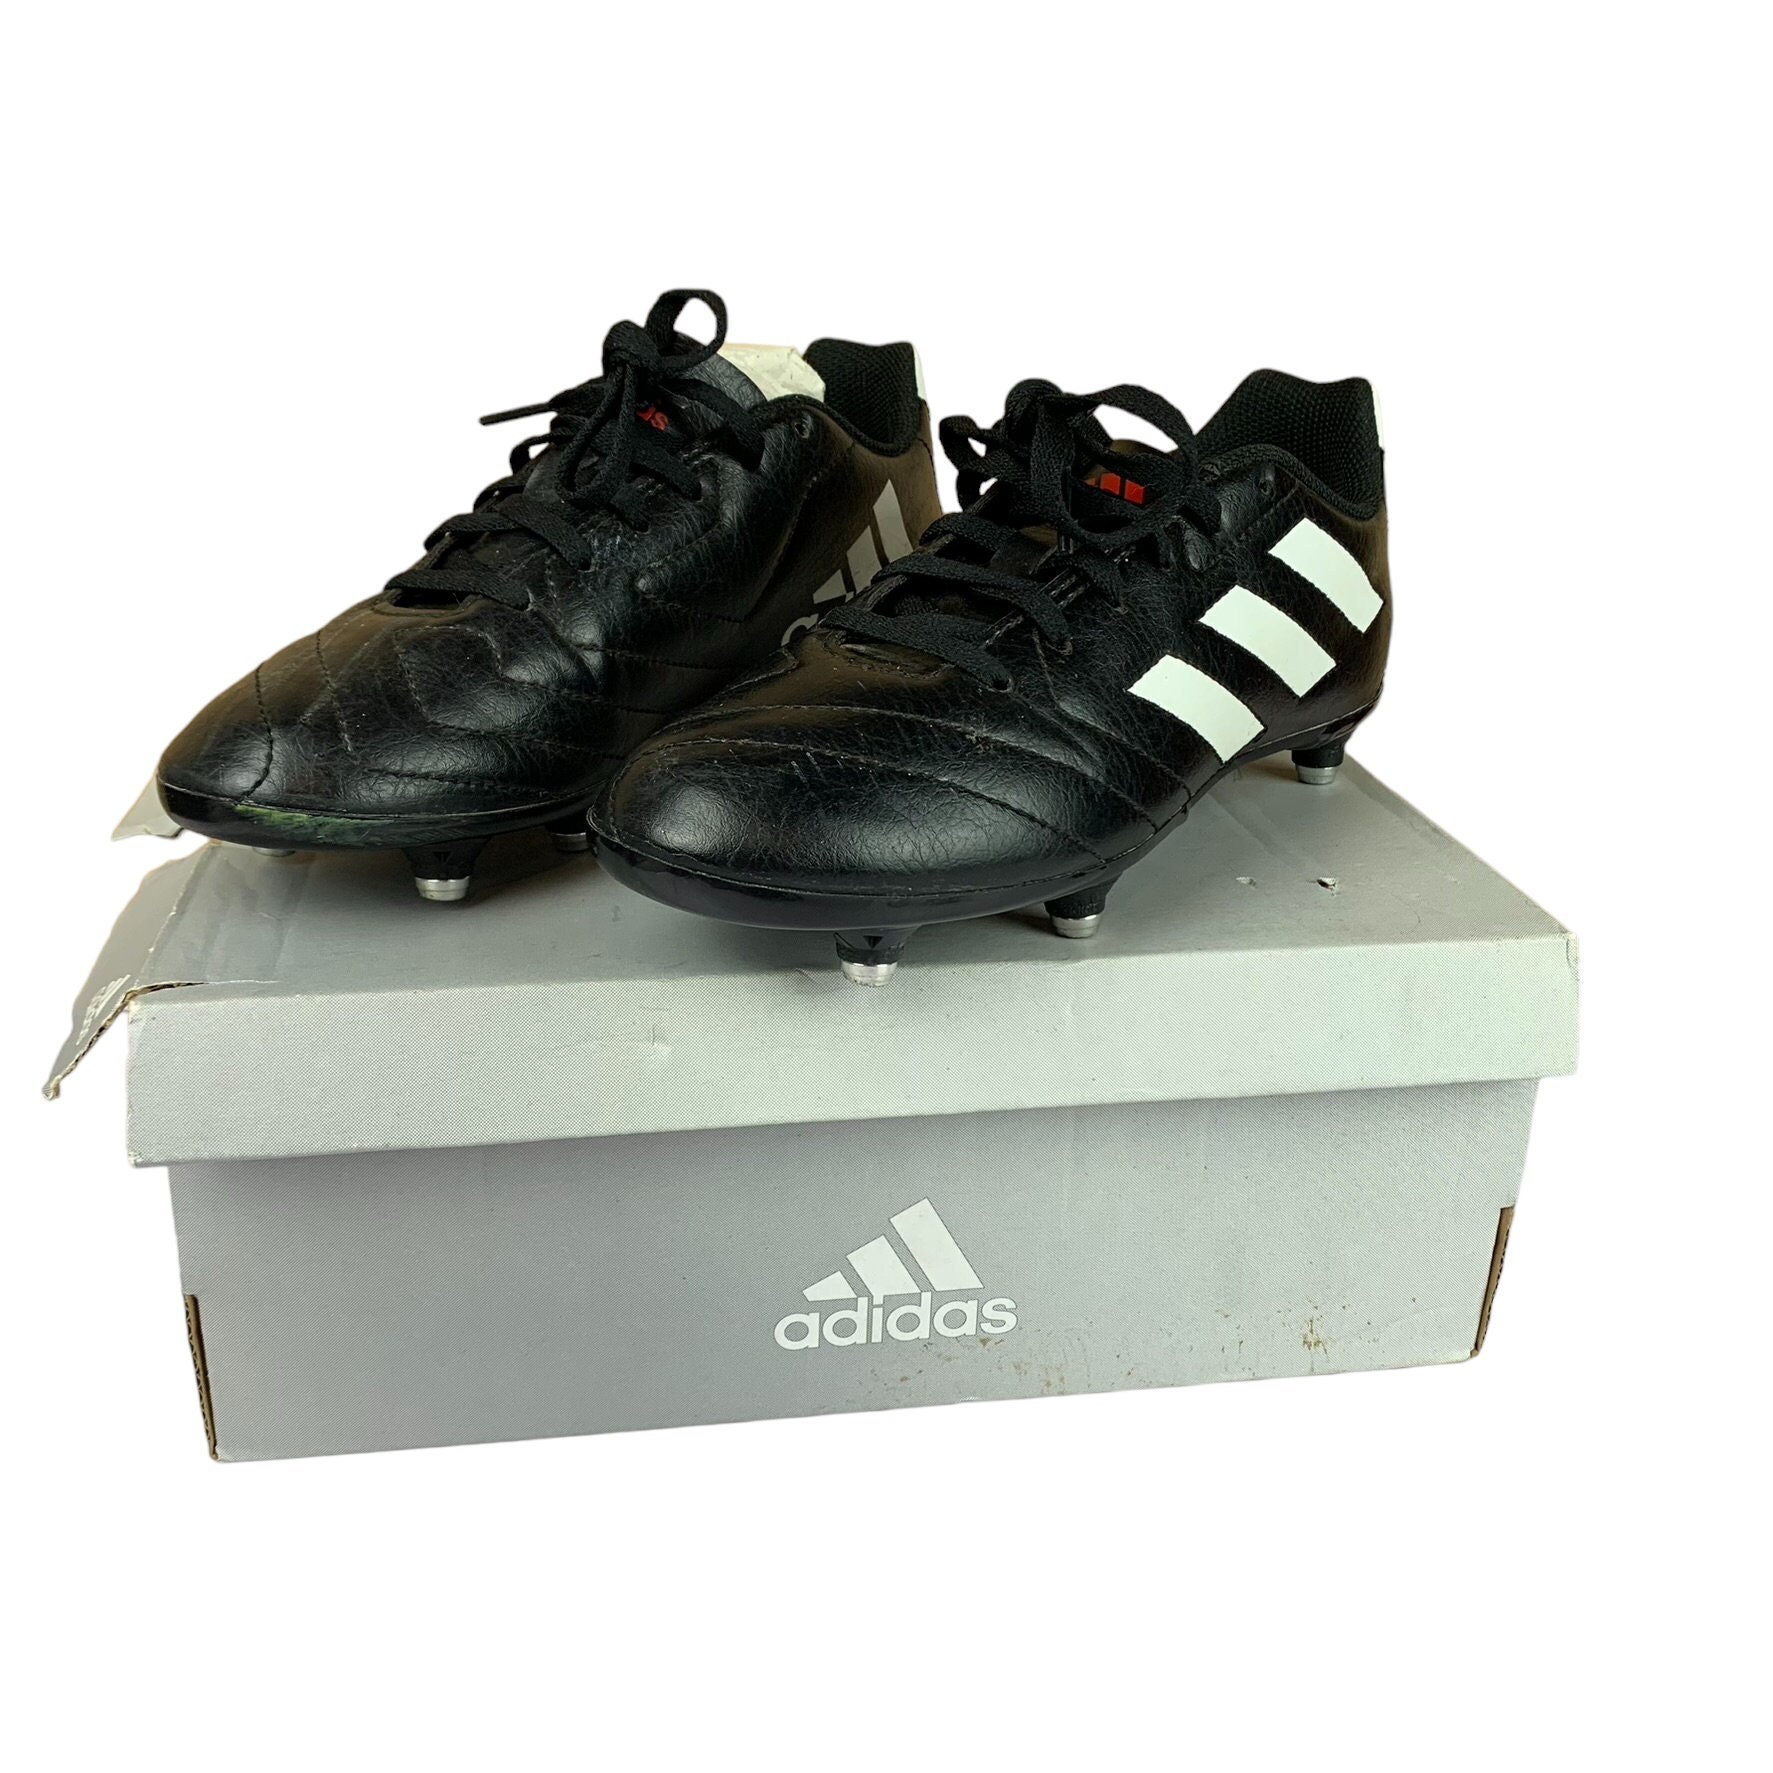 Adidas Predator Rapier 1994 SG Football Boots US9 Soccer Cleats